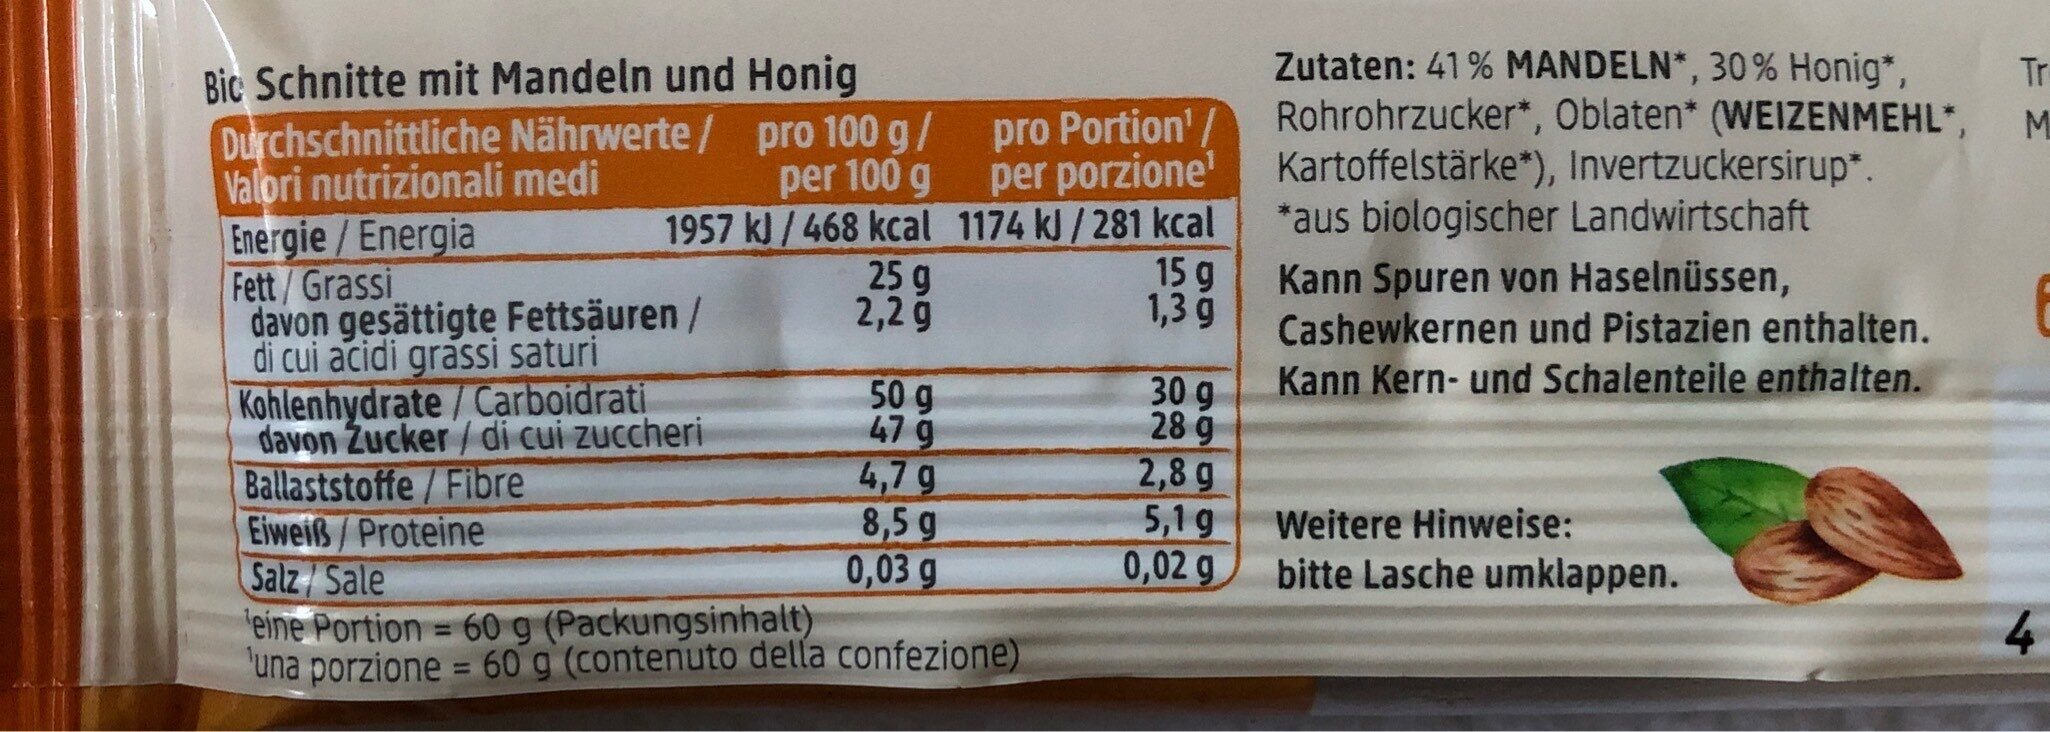 DmBio Mandel Honig Schnitte - Tableau nutritionnel